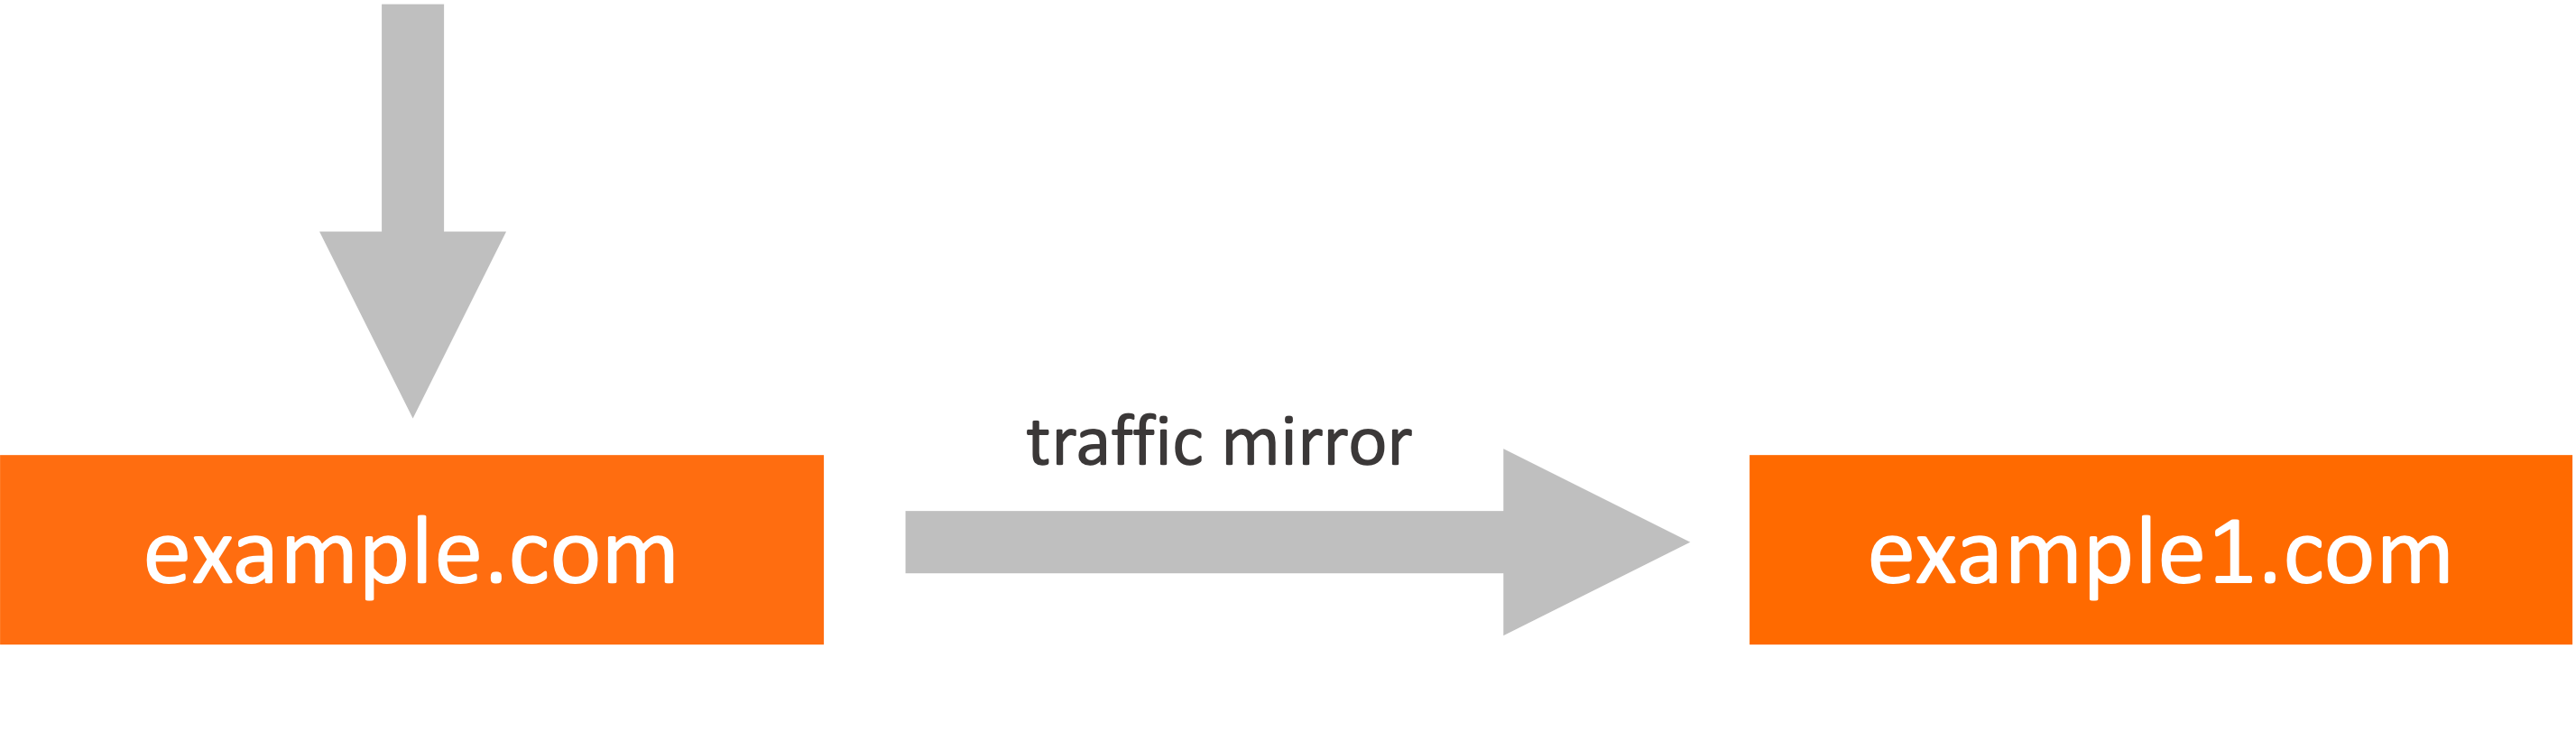 Mirror network traffic